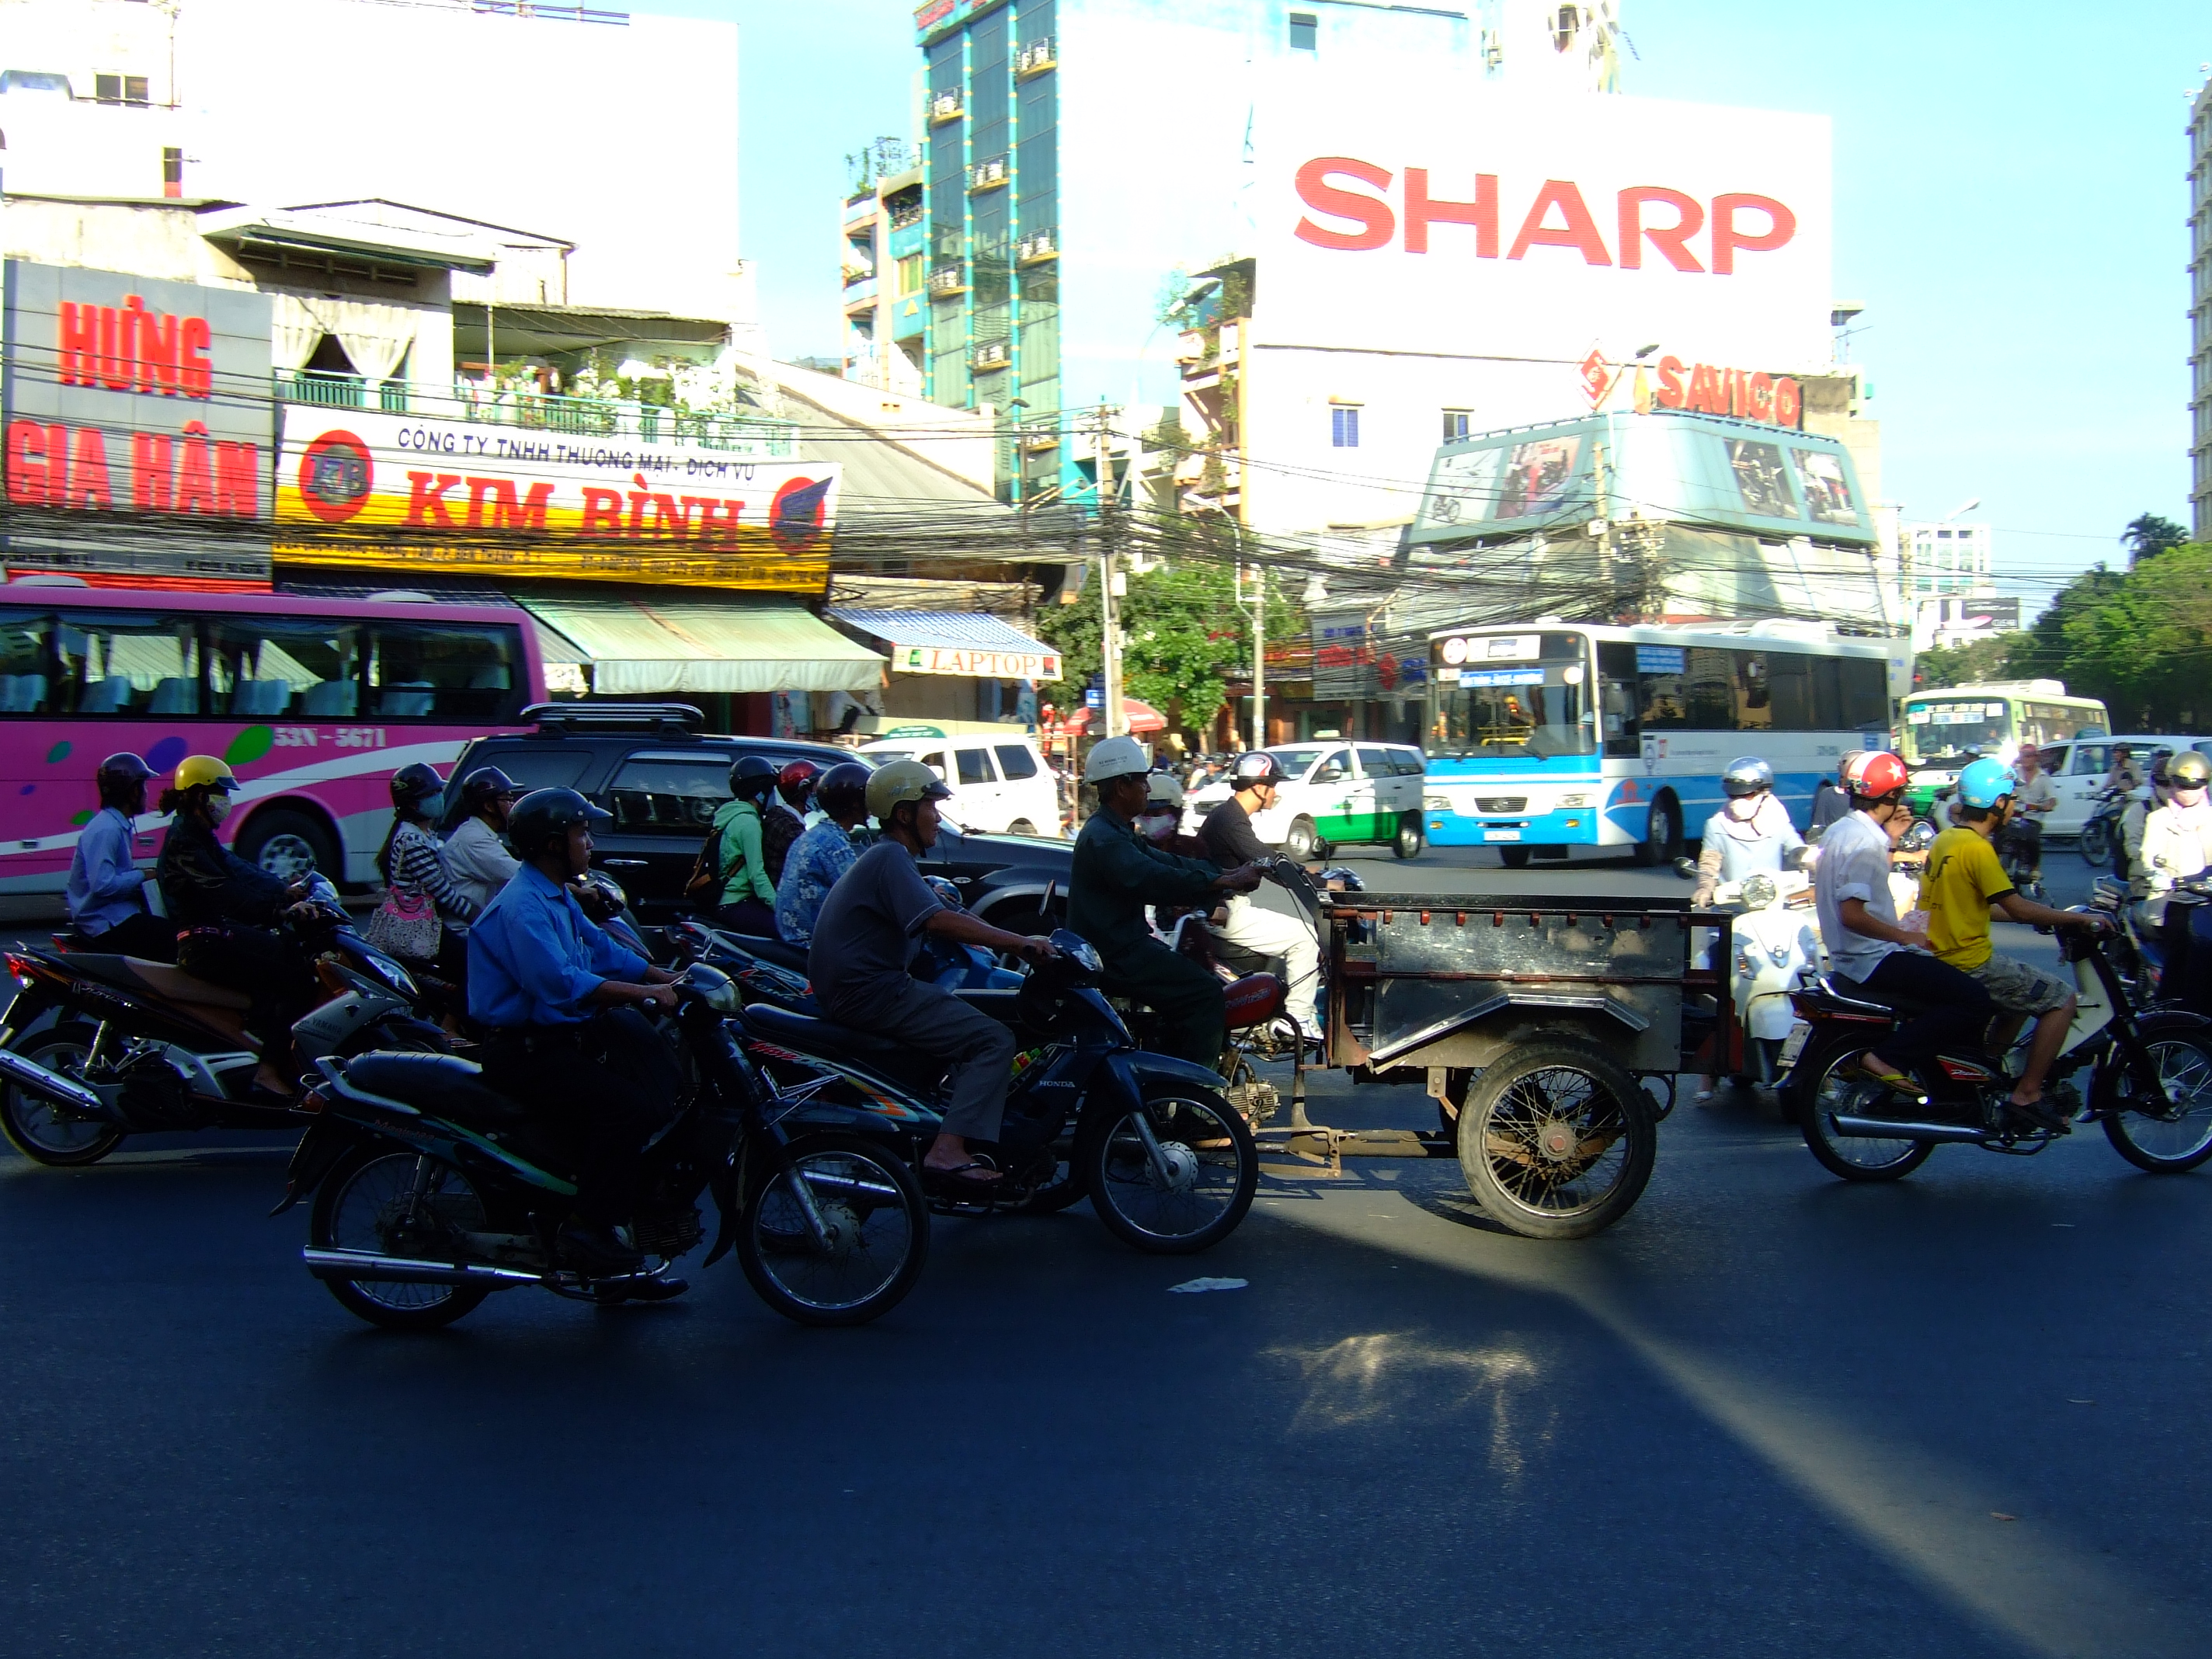 Vietnam Ho Chi Minh City motorbike street scenes Feb 2009 090